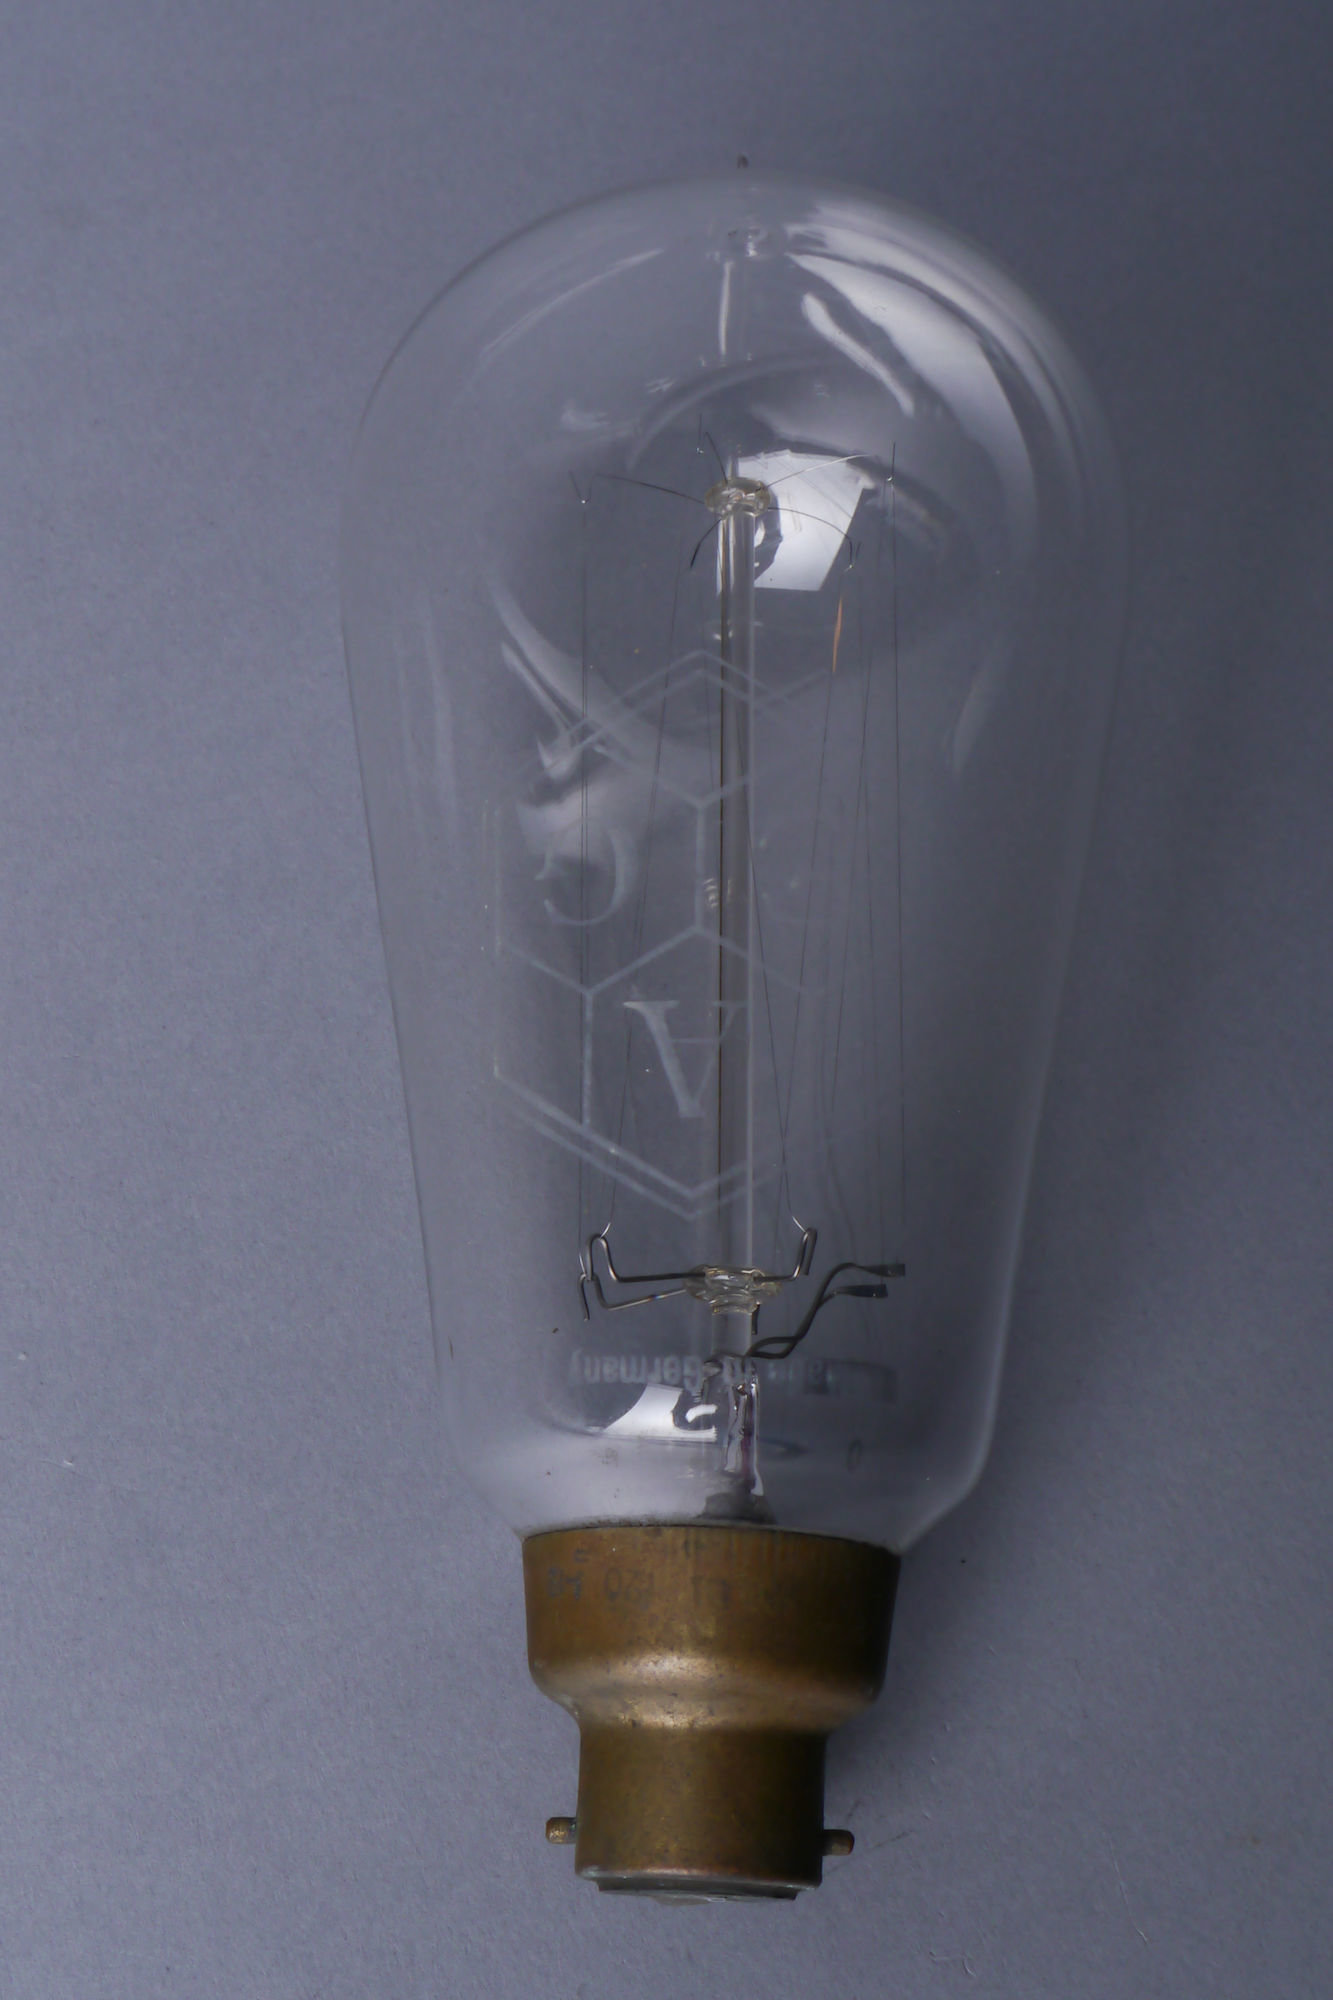 Kooldraadlamp van het merk AEG